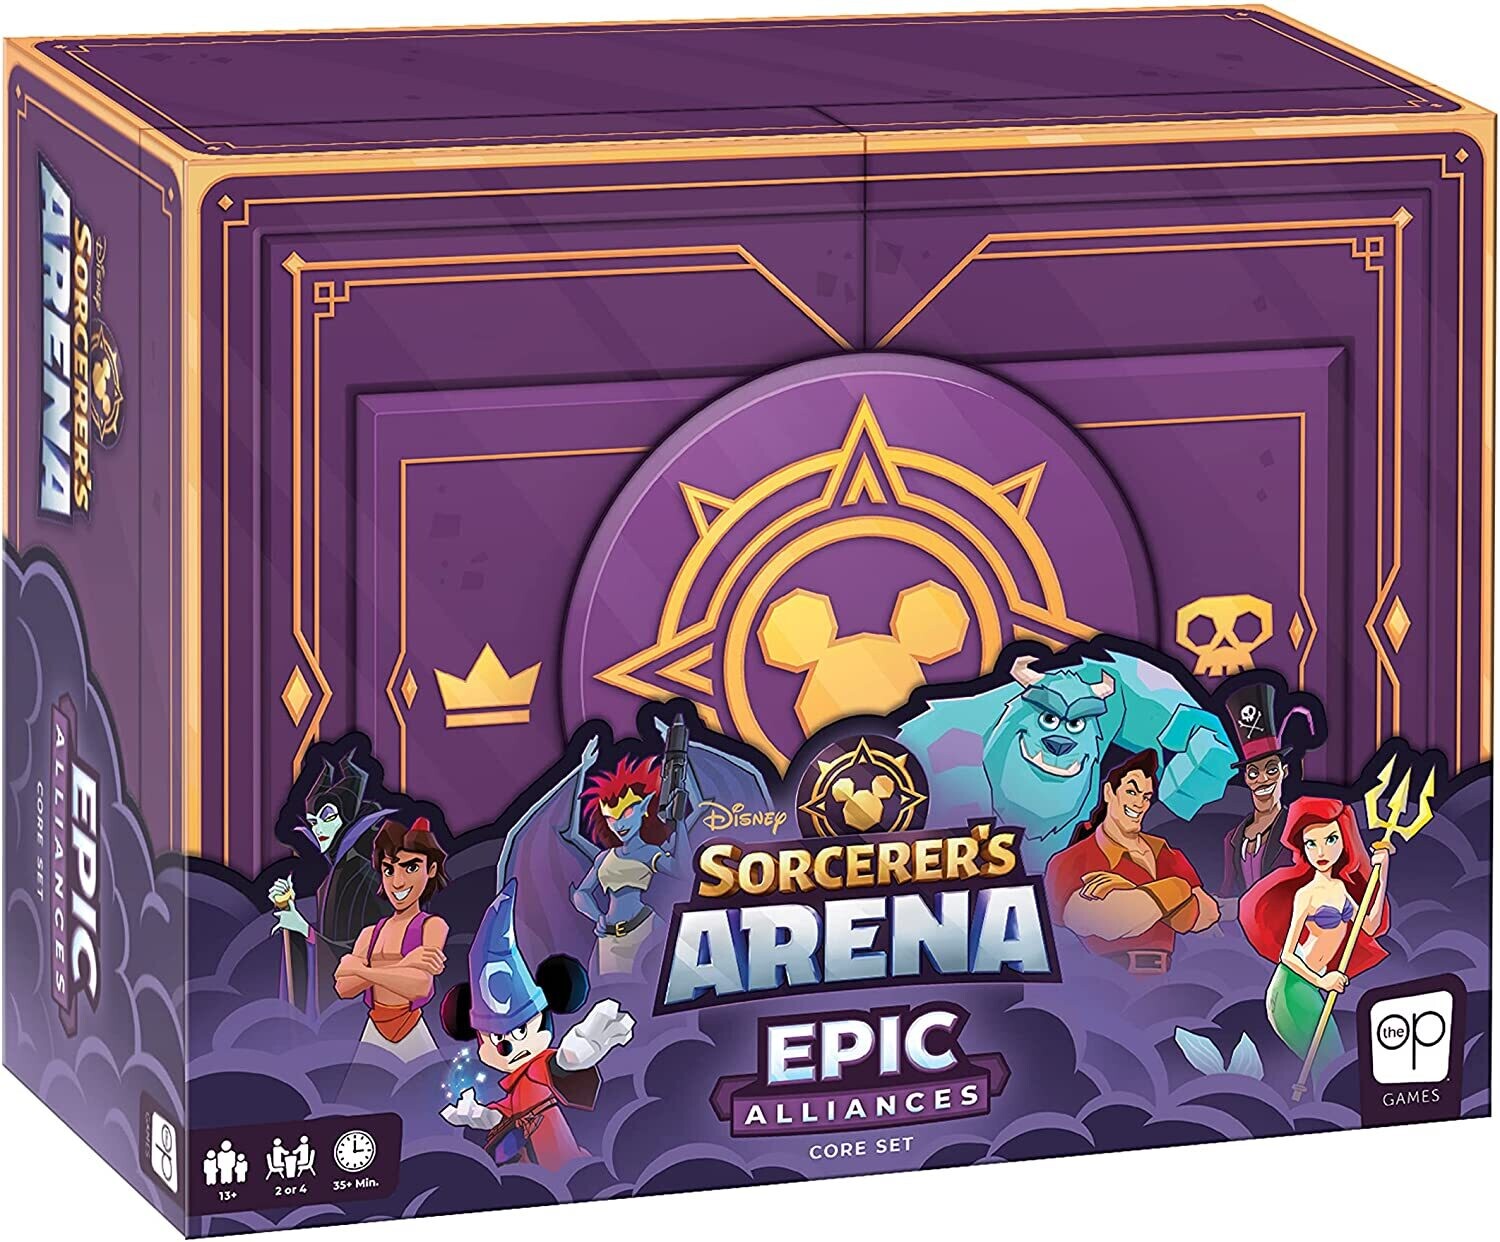 Disney Sorcerer's Arena Core Set